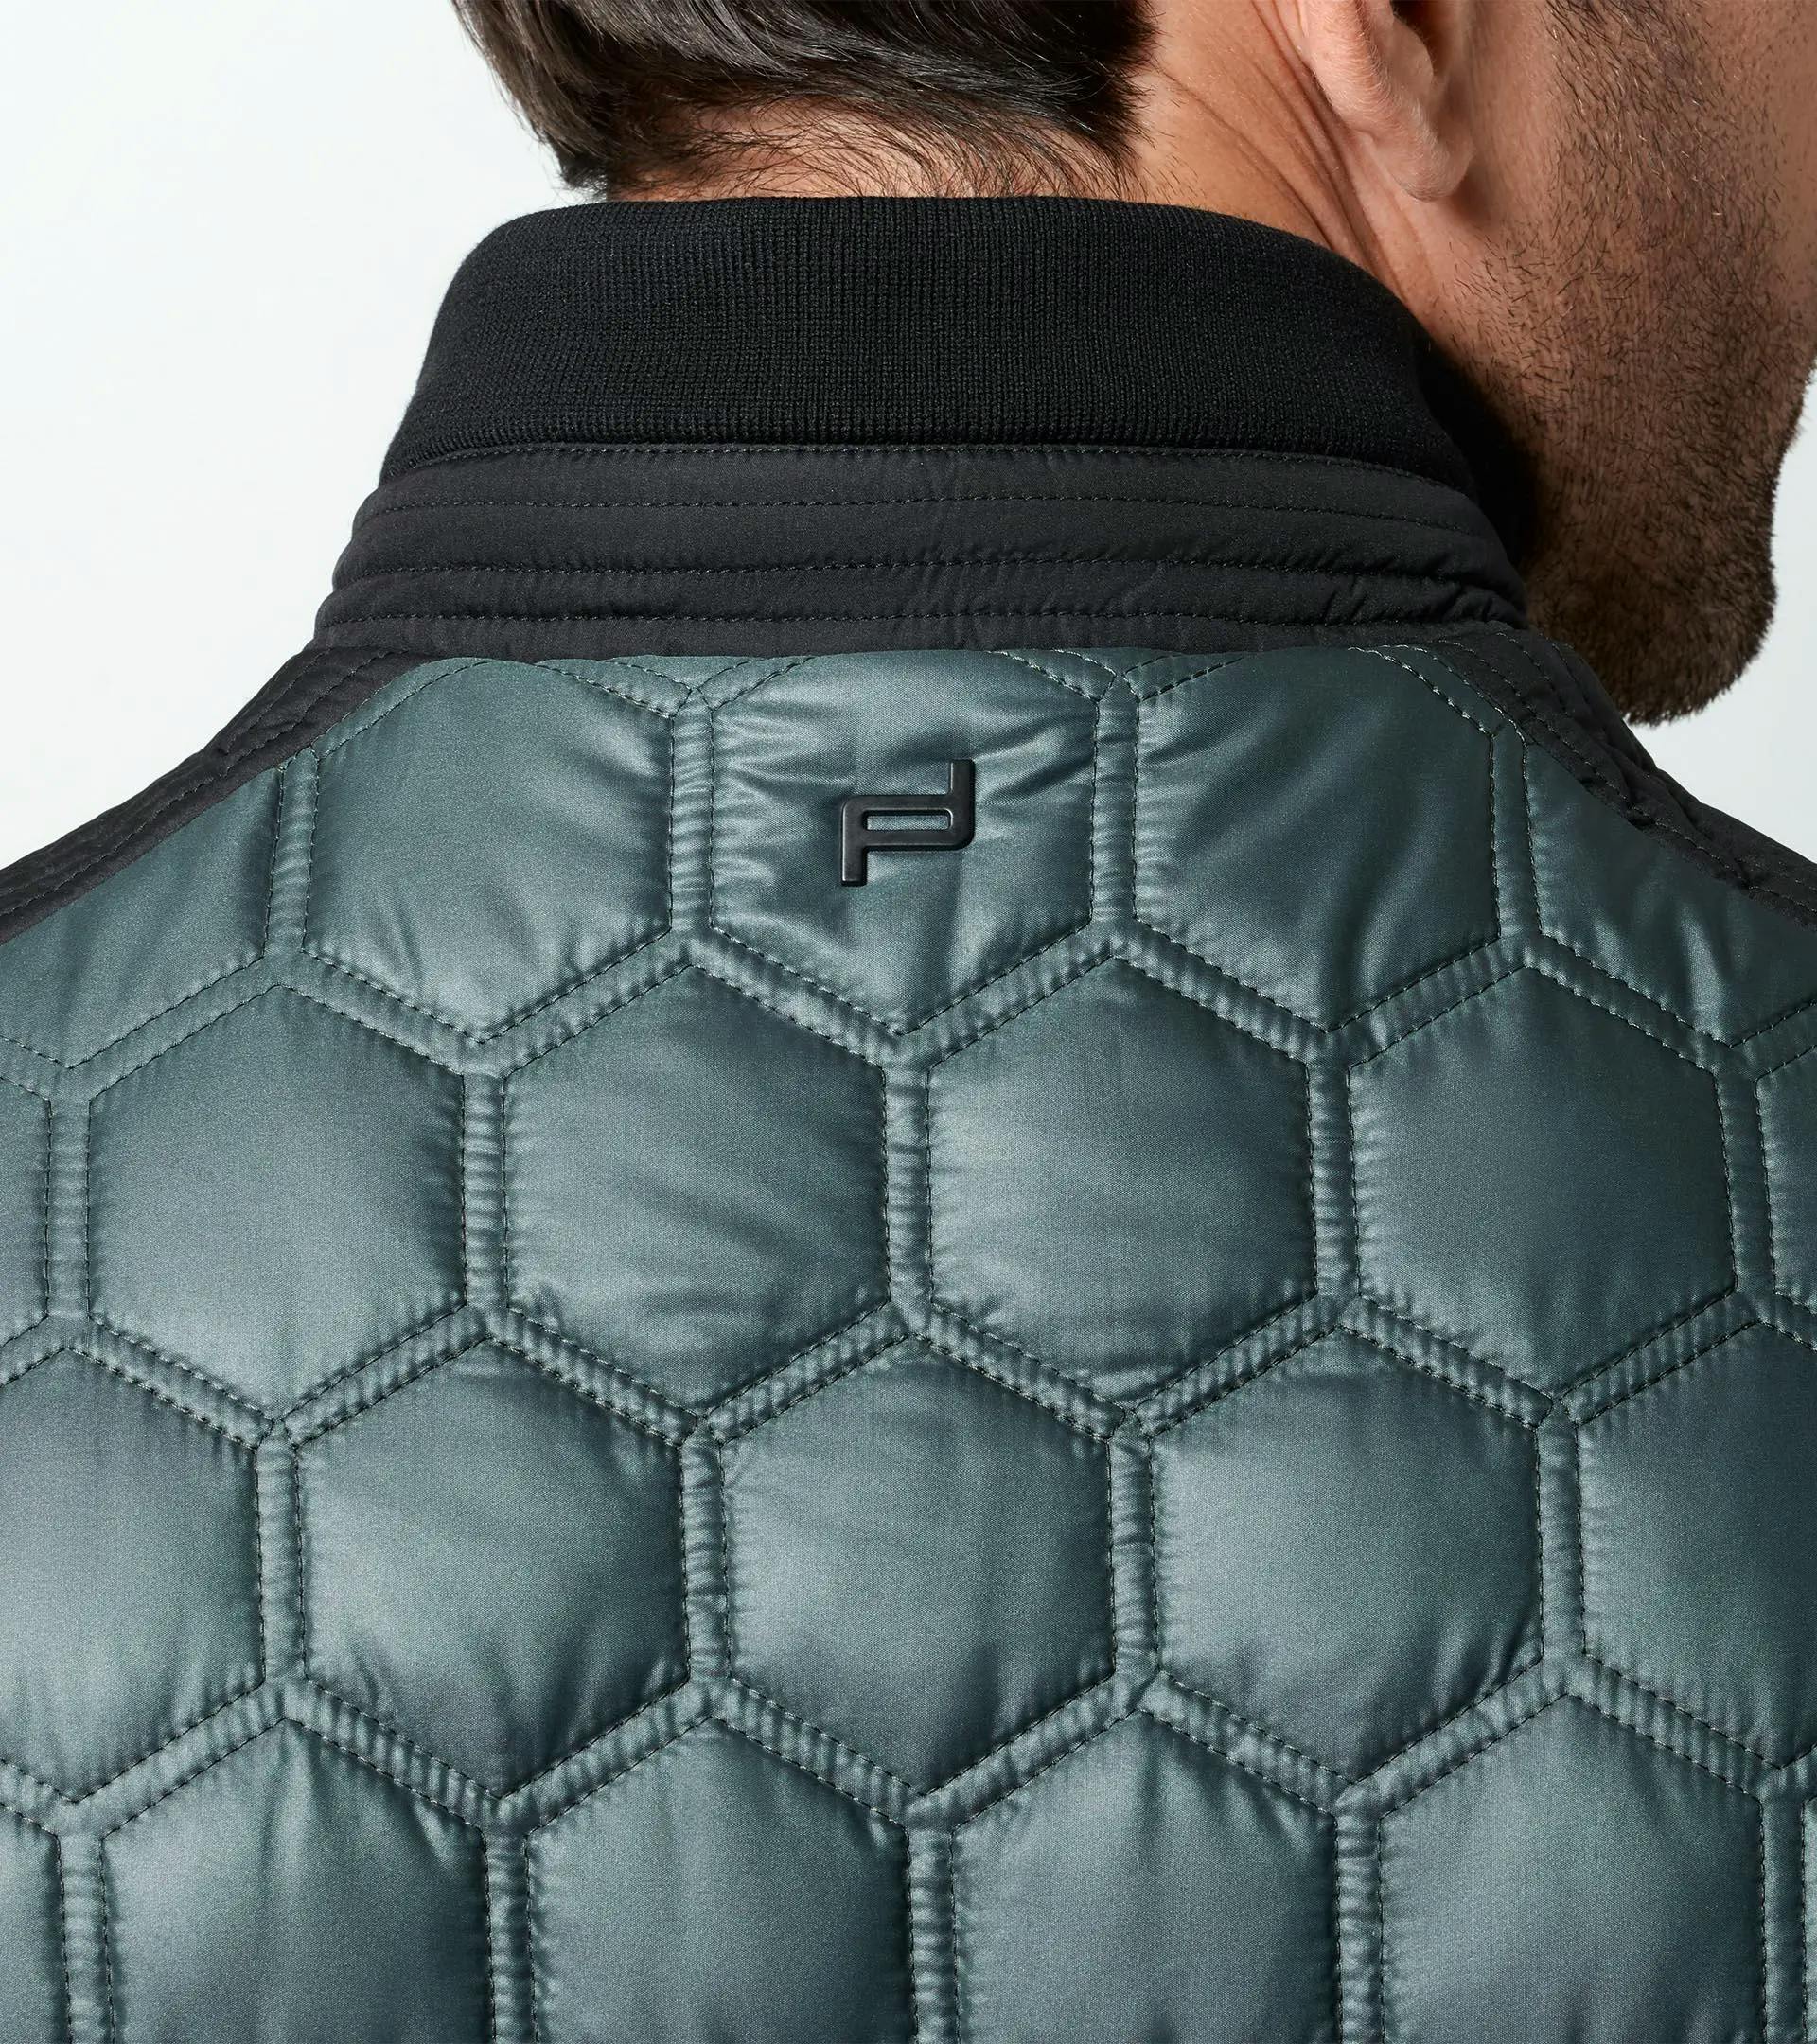 Hexagon Vest | PORSCHE SHOP